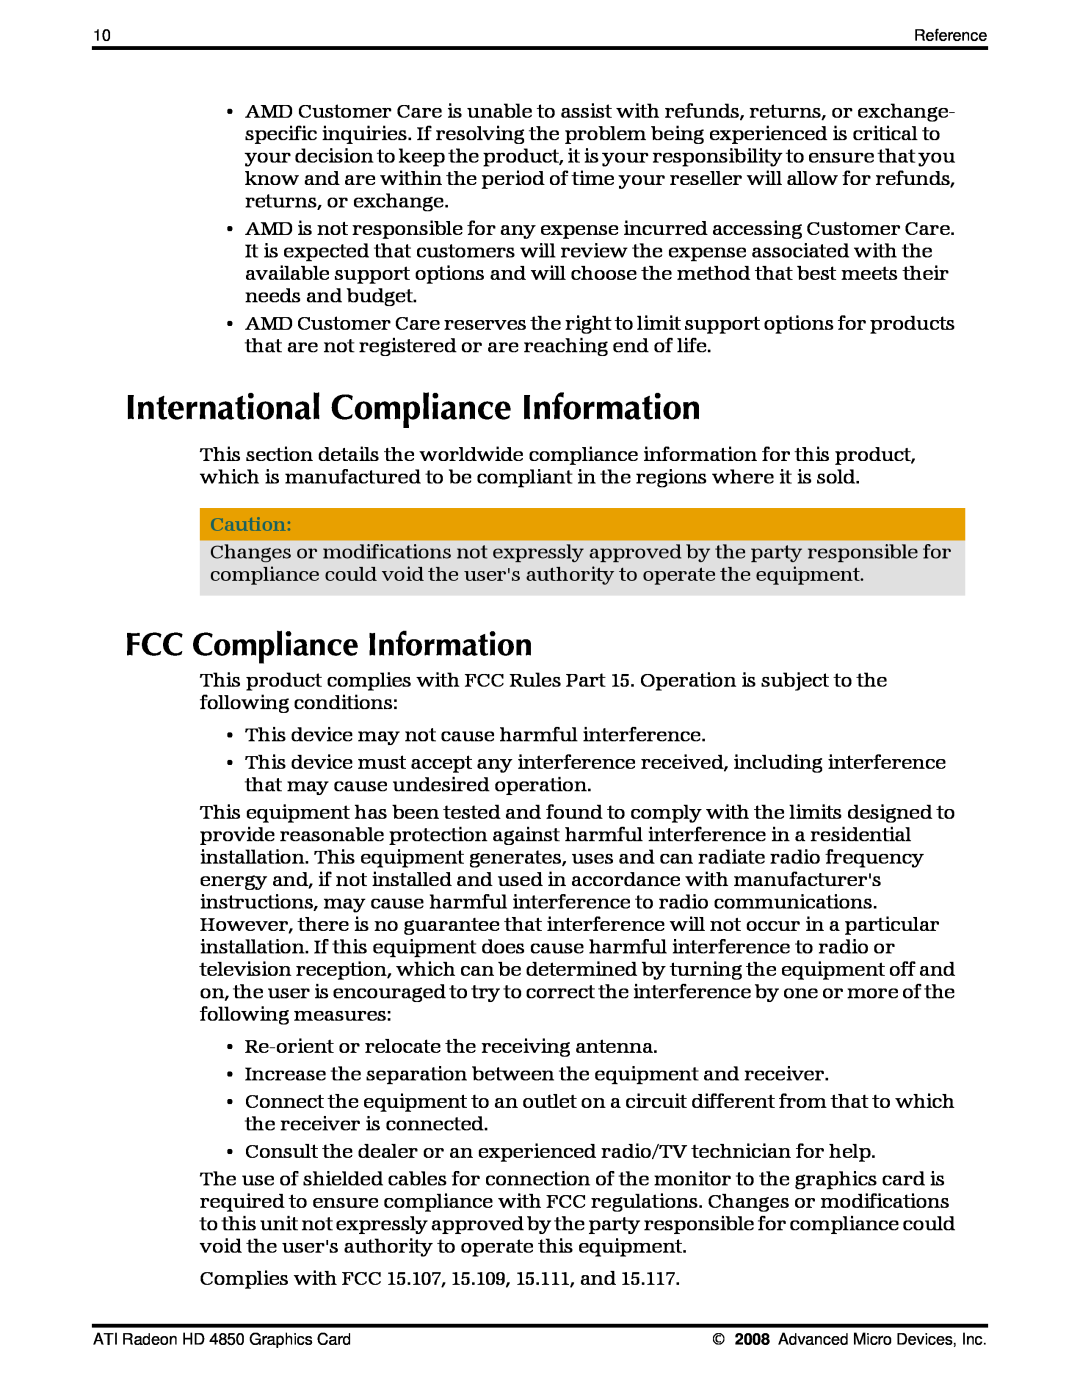 AMD 4850 manual International Compliance Information, FCC Compliance Information 